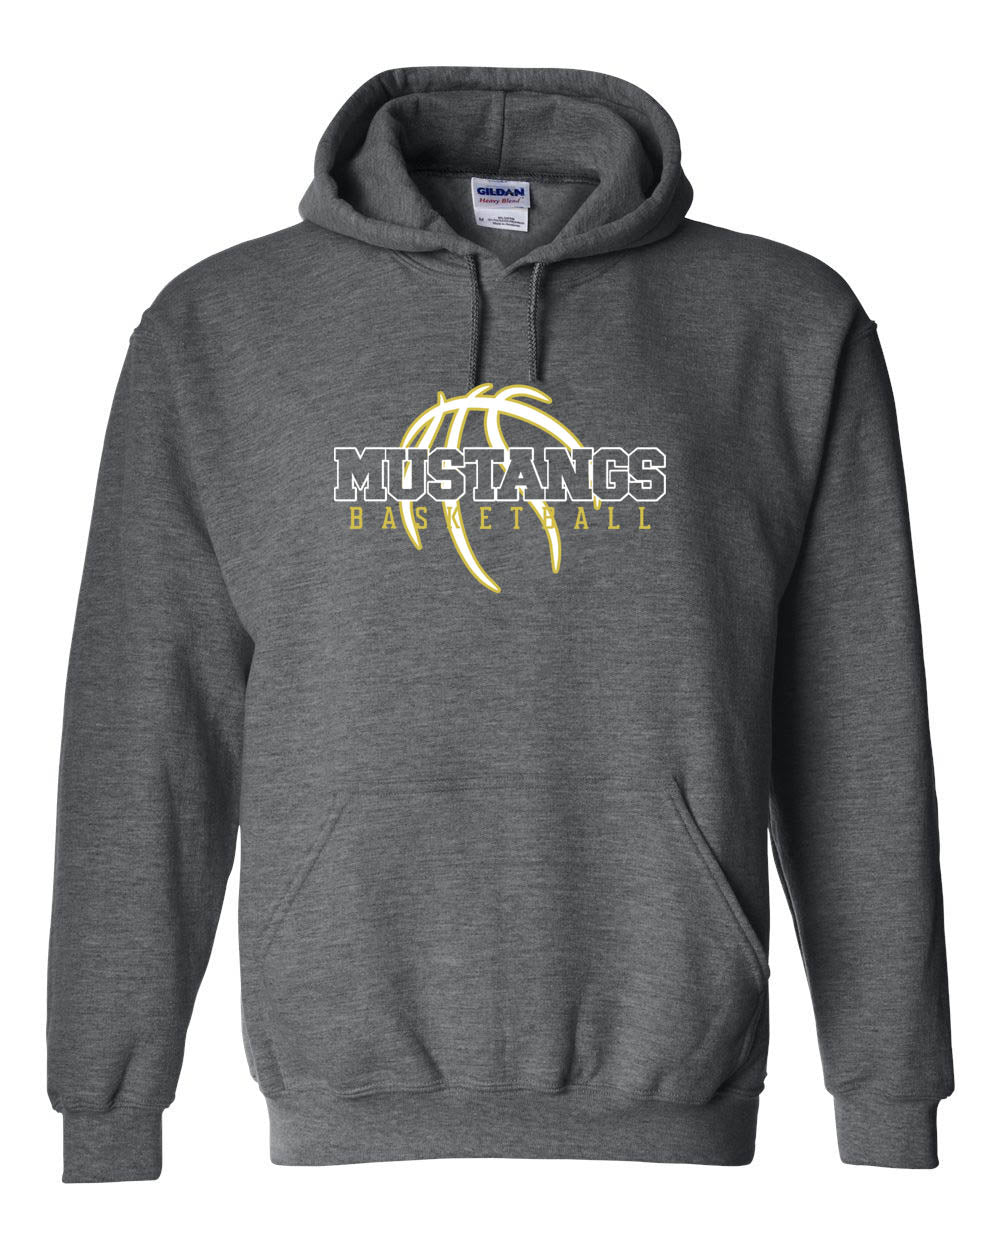 Green Hills Basketball Design 5 Hooded Sweatshirt